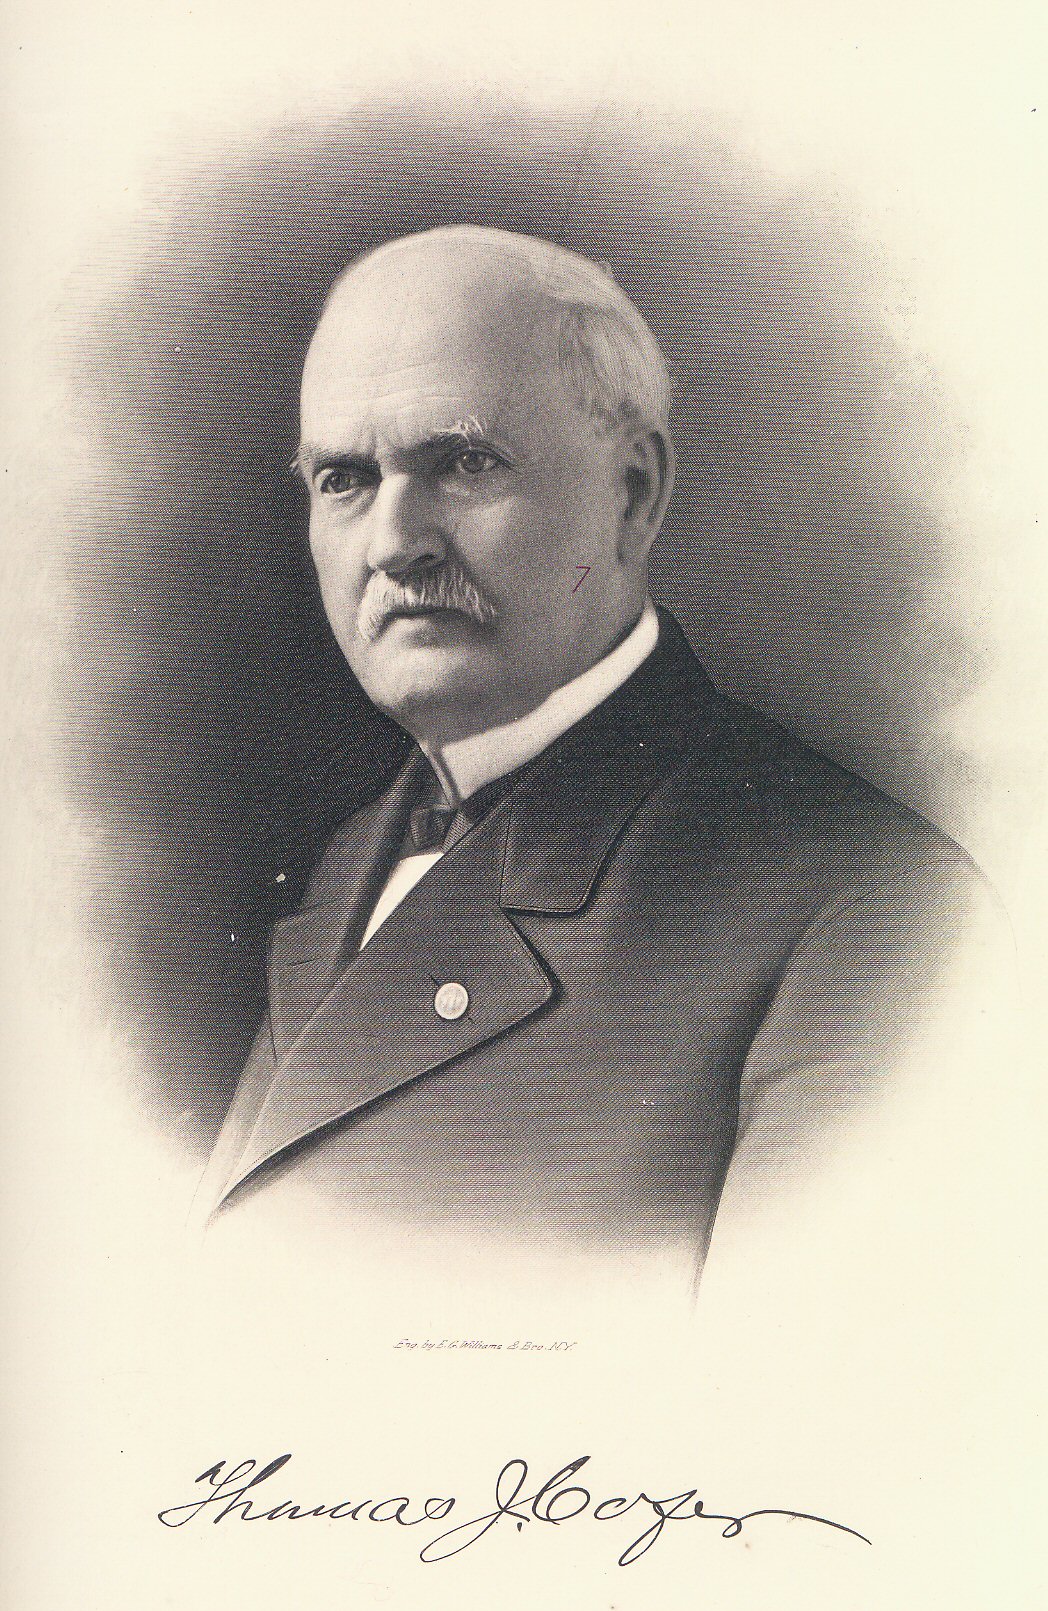 Thomas J. Cofer